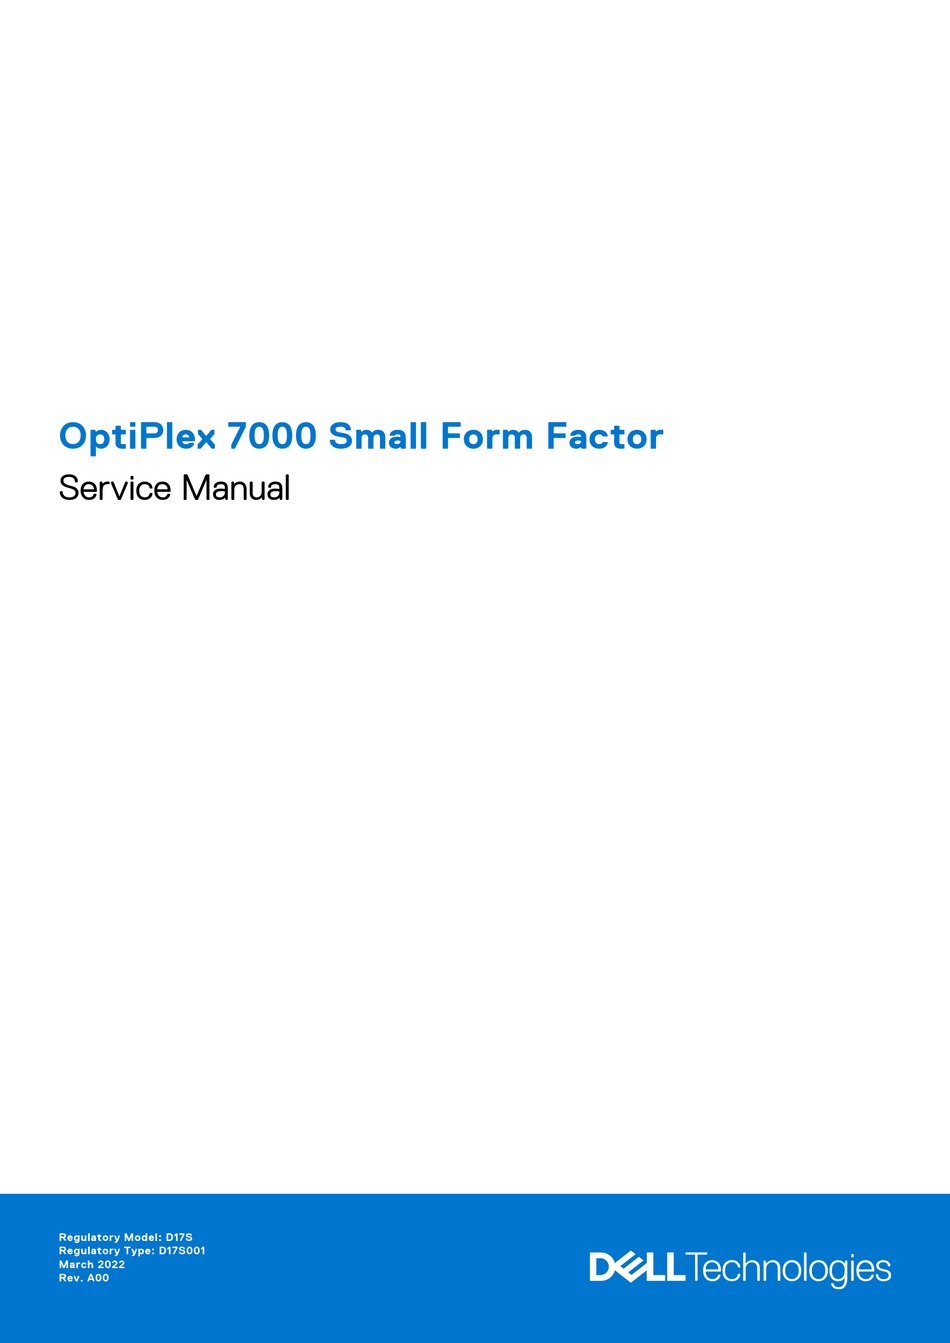 dell-optiplex-7000-small-form-factor-service-manual-pdf-download